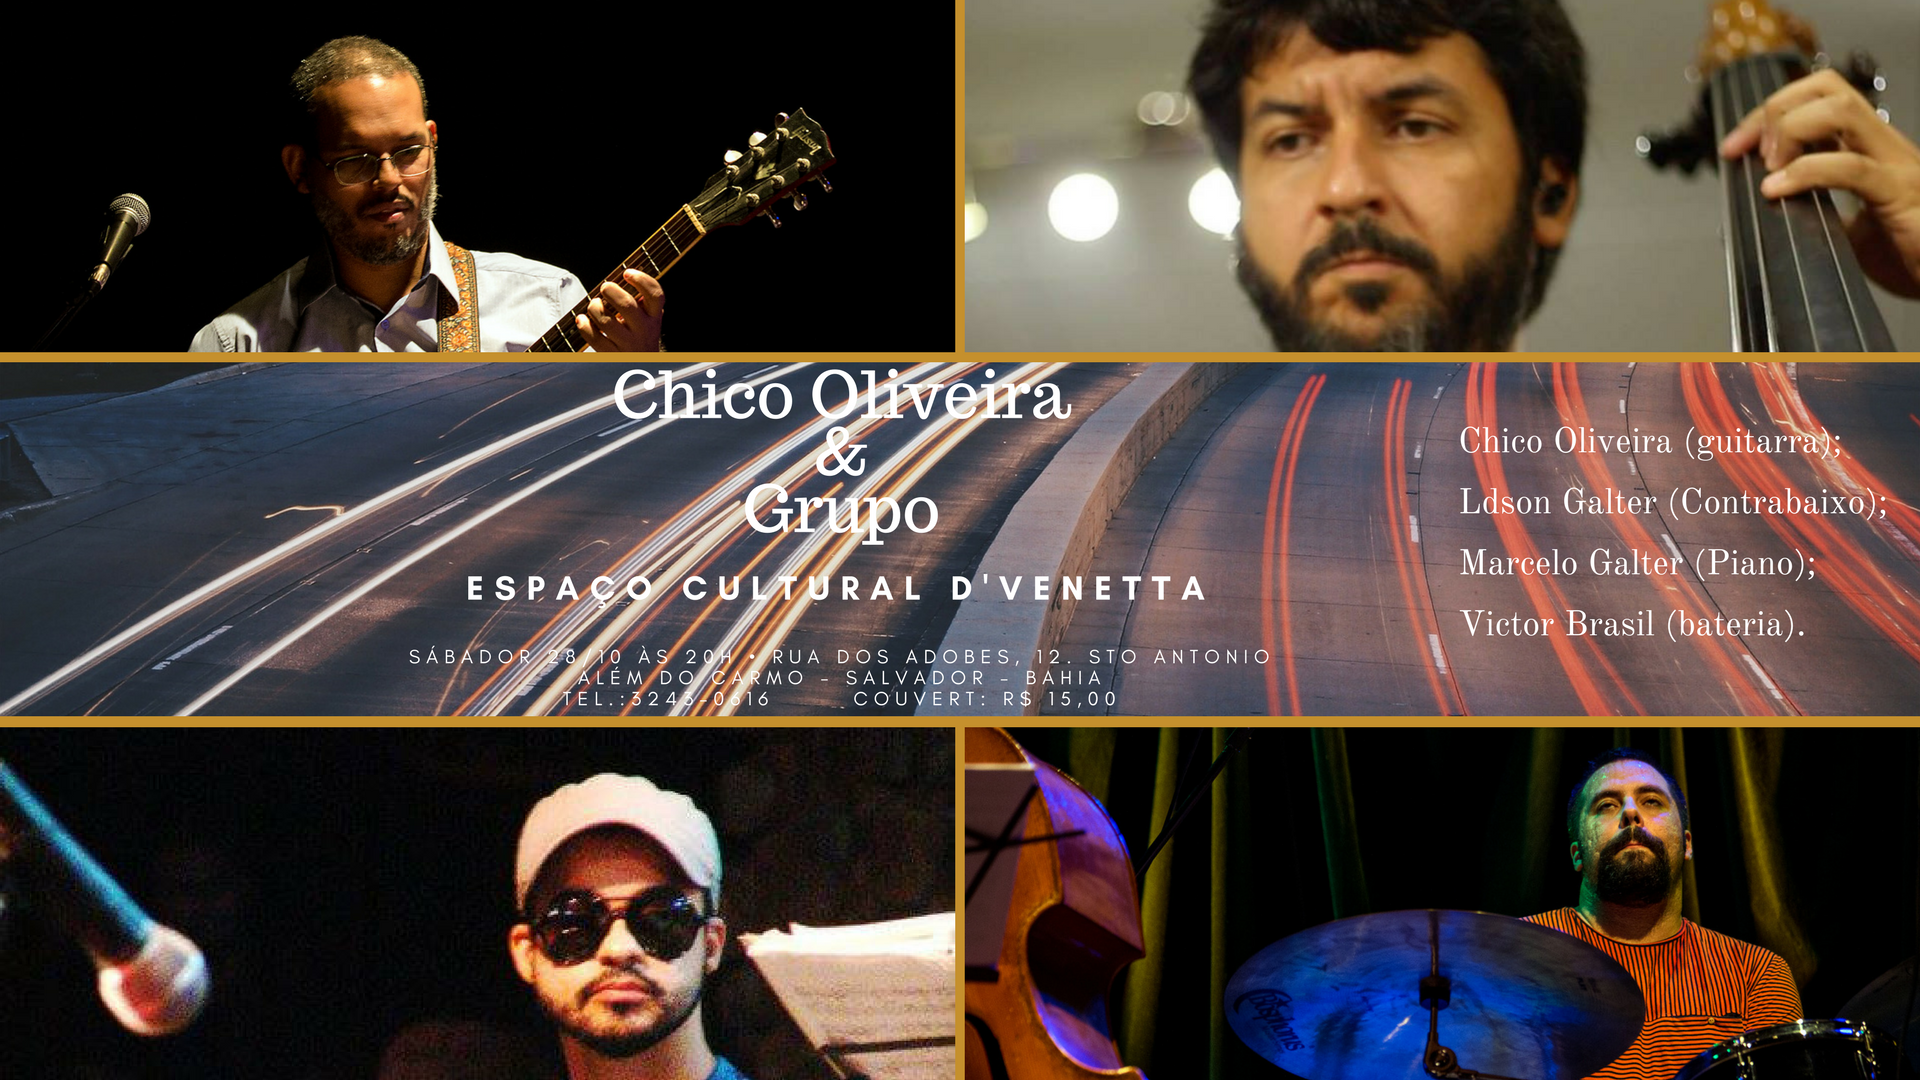 Chico Oliveira grupo Espaço Cultural D'Venetta Ldson Galter Marcelo Galter Victor Brasil